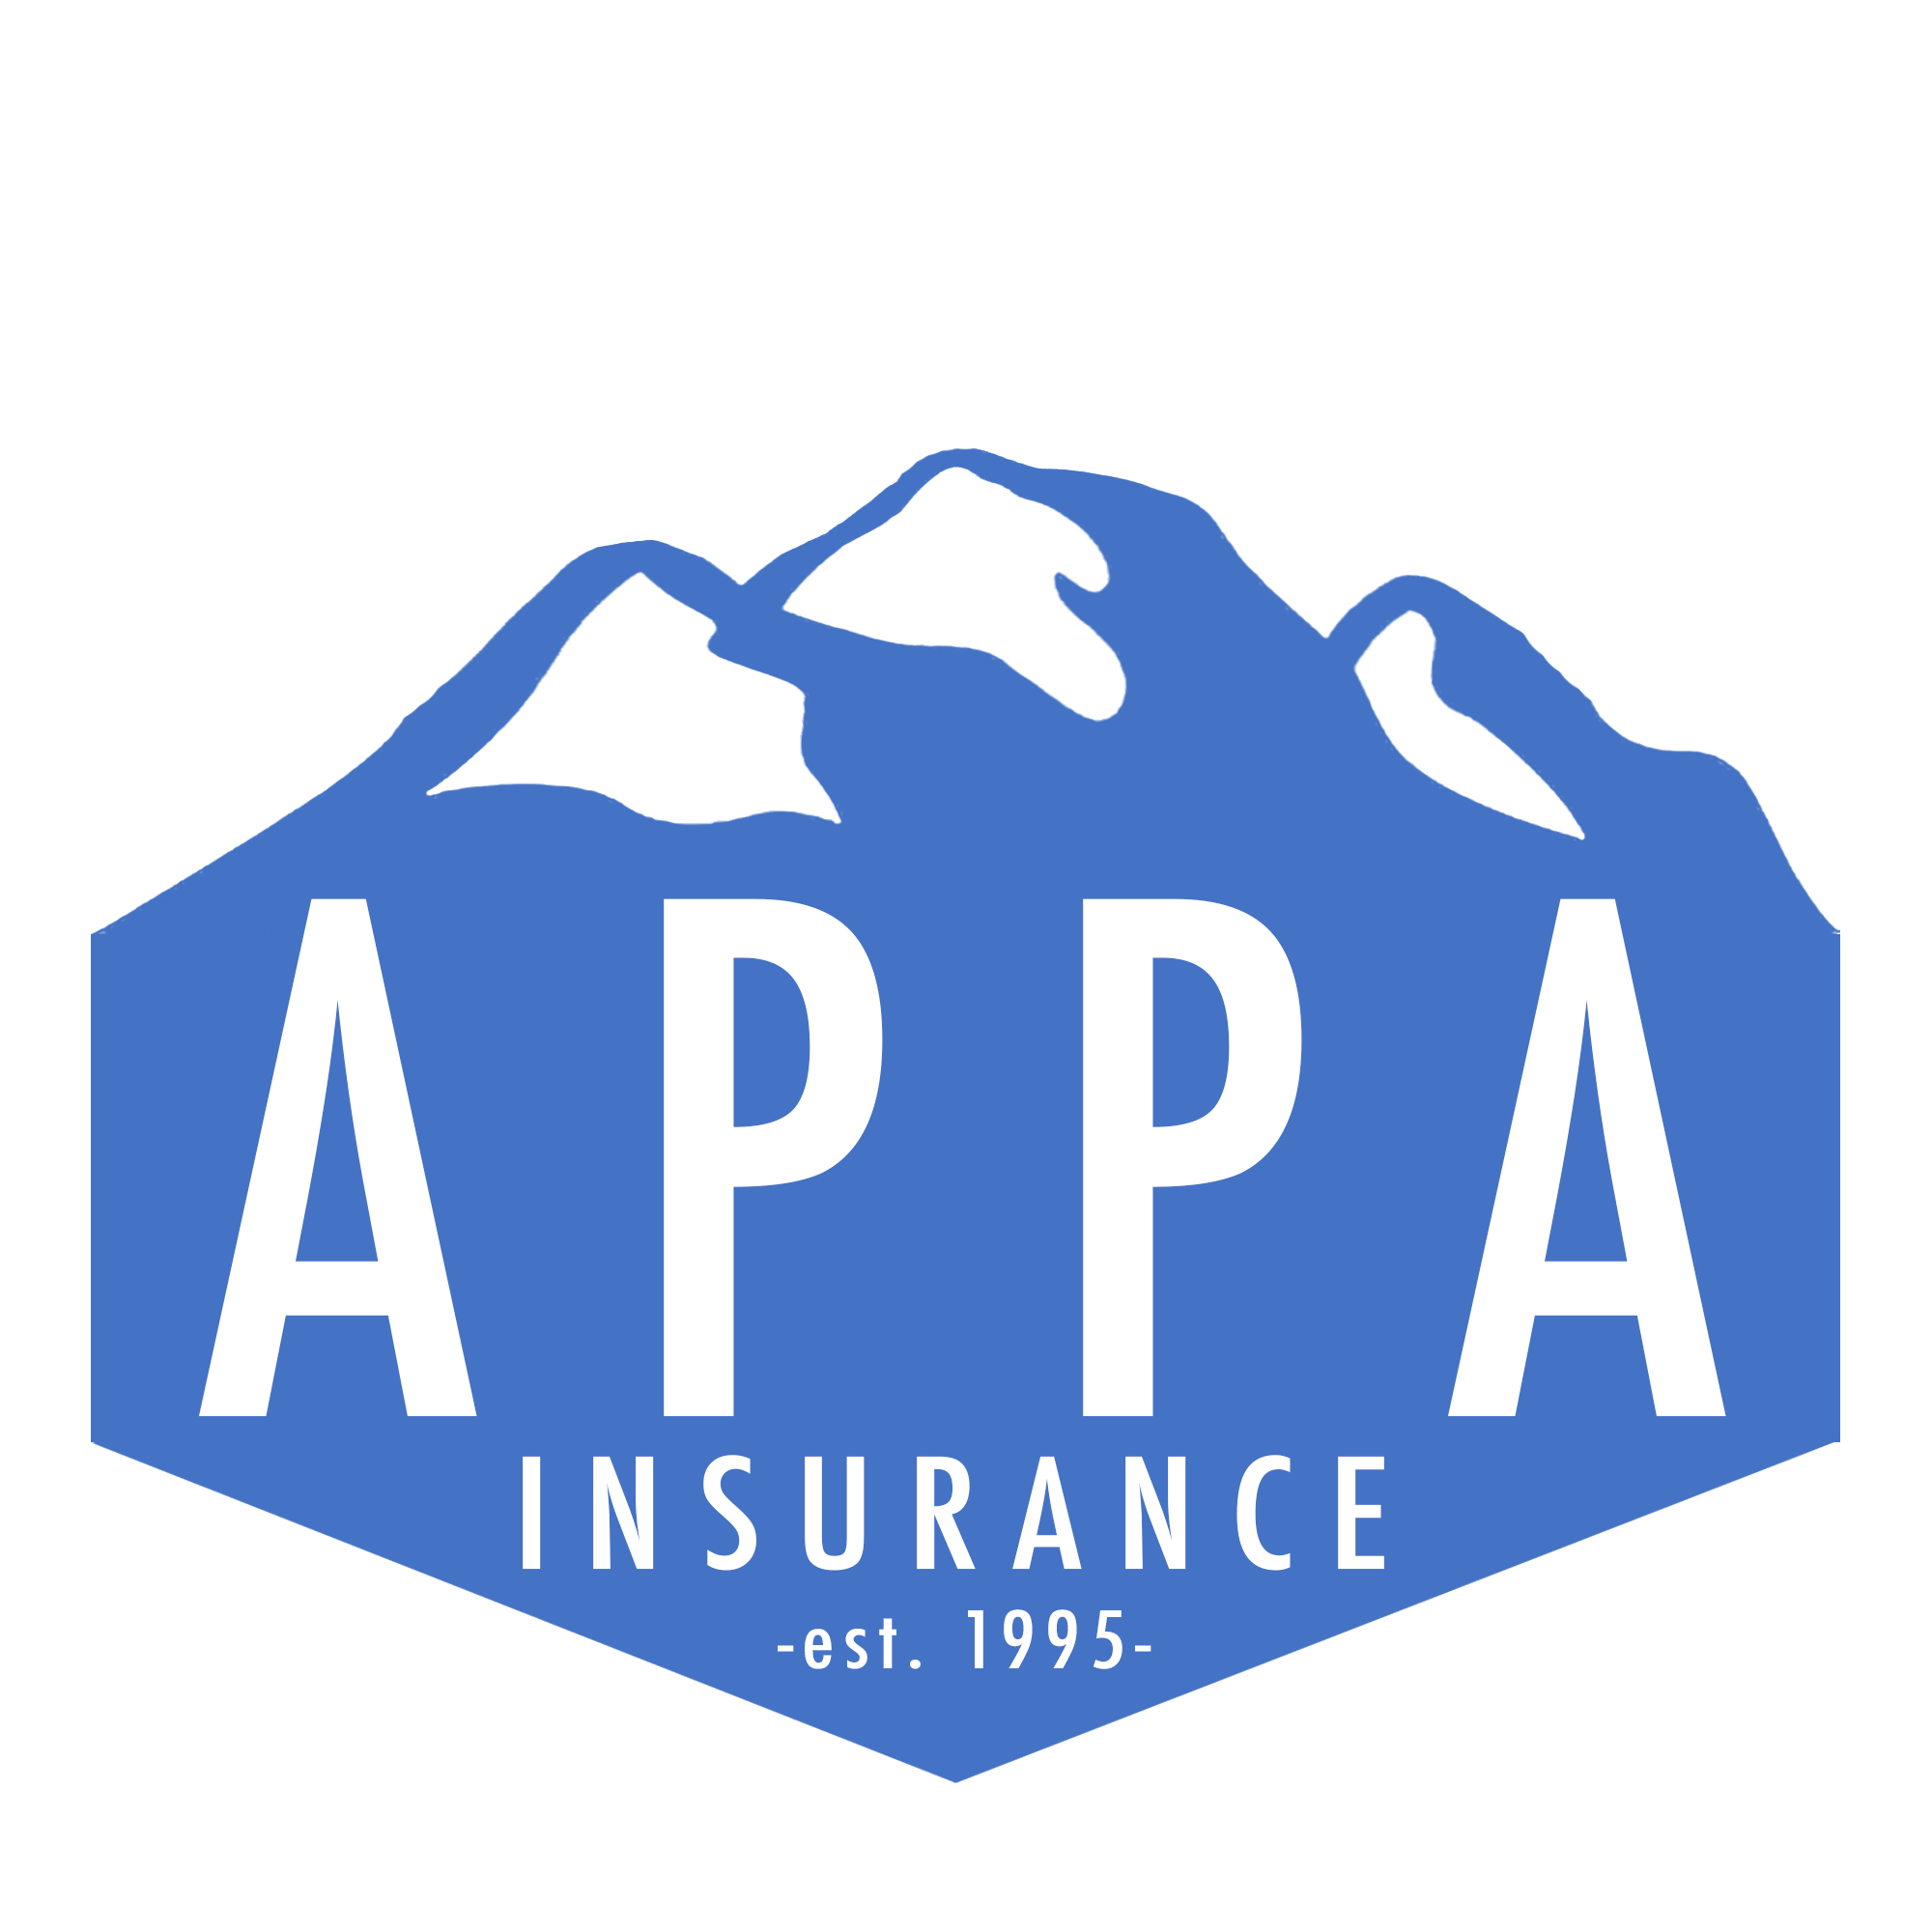 APPA Insurance